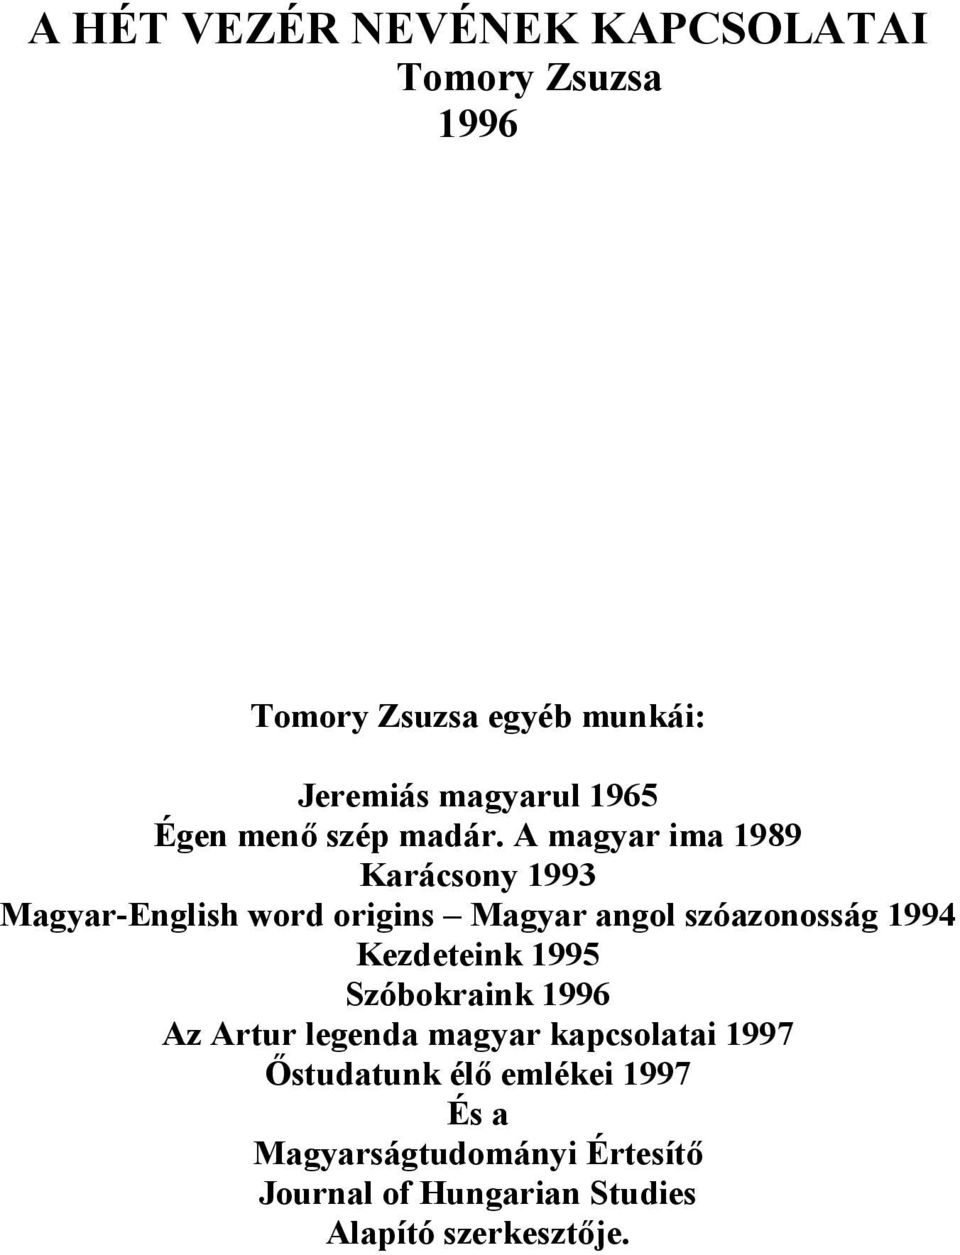 A magyar ima 1989 Karácsony 1993 Magyar-English word origins Magyar angol szóazonosság 1994